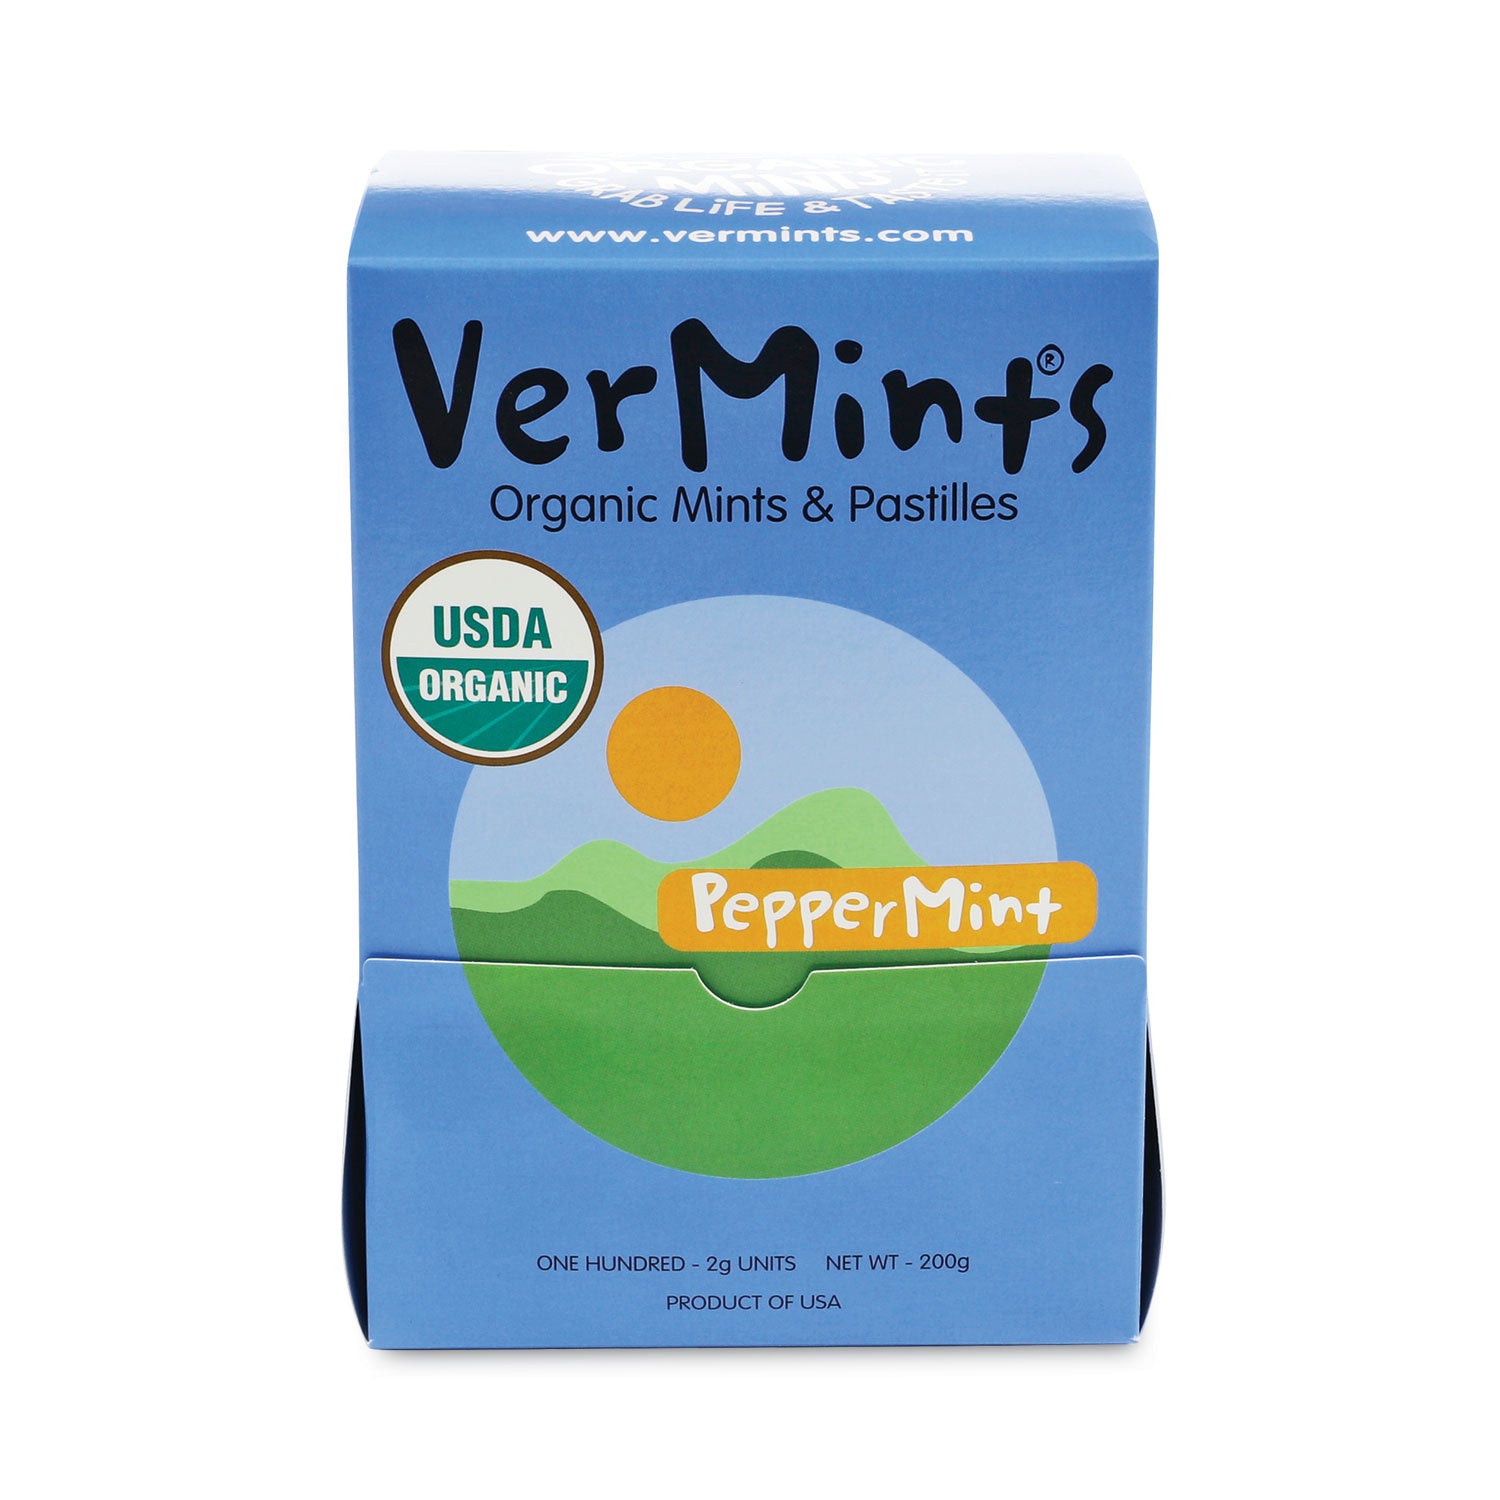 vermints-organic-mints-pastilles-peppermint-2-mints-07-oz-individually-wrapped-100-box_vemvnt00992 - 3